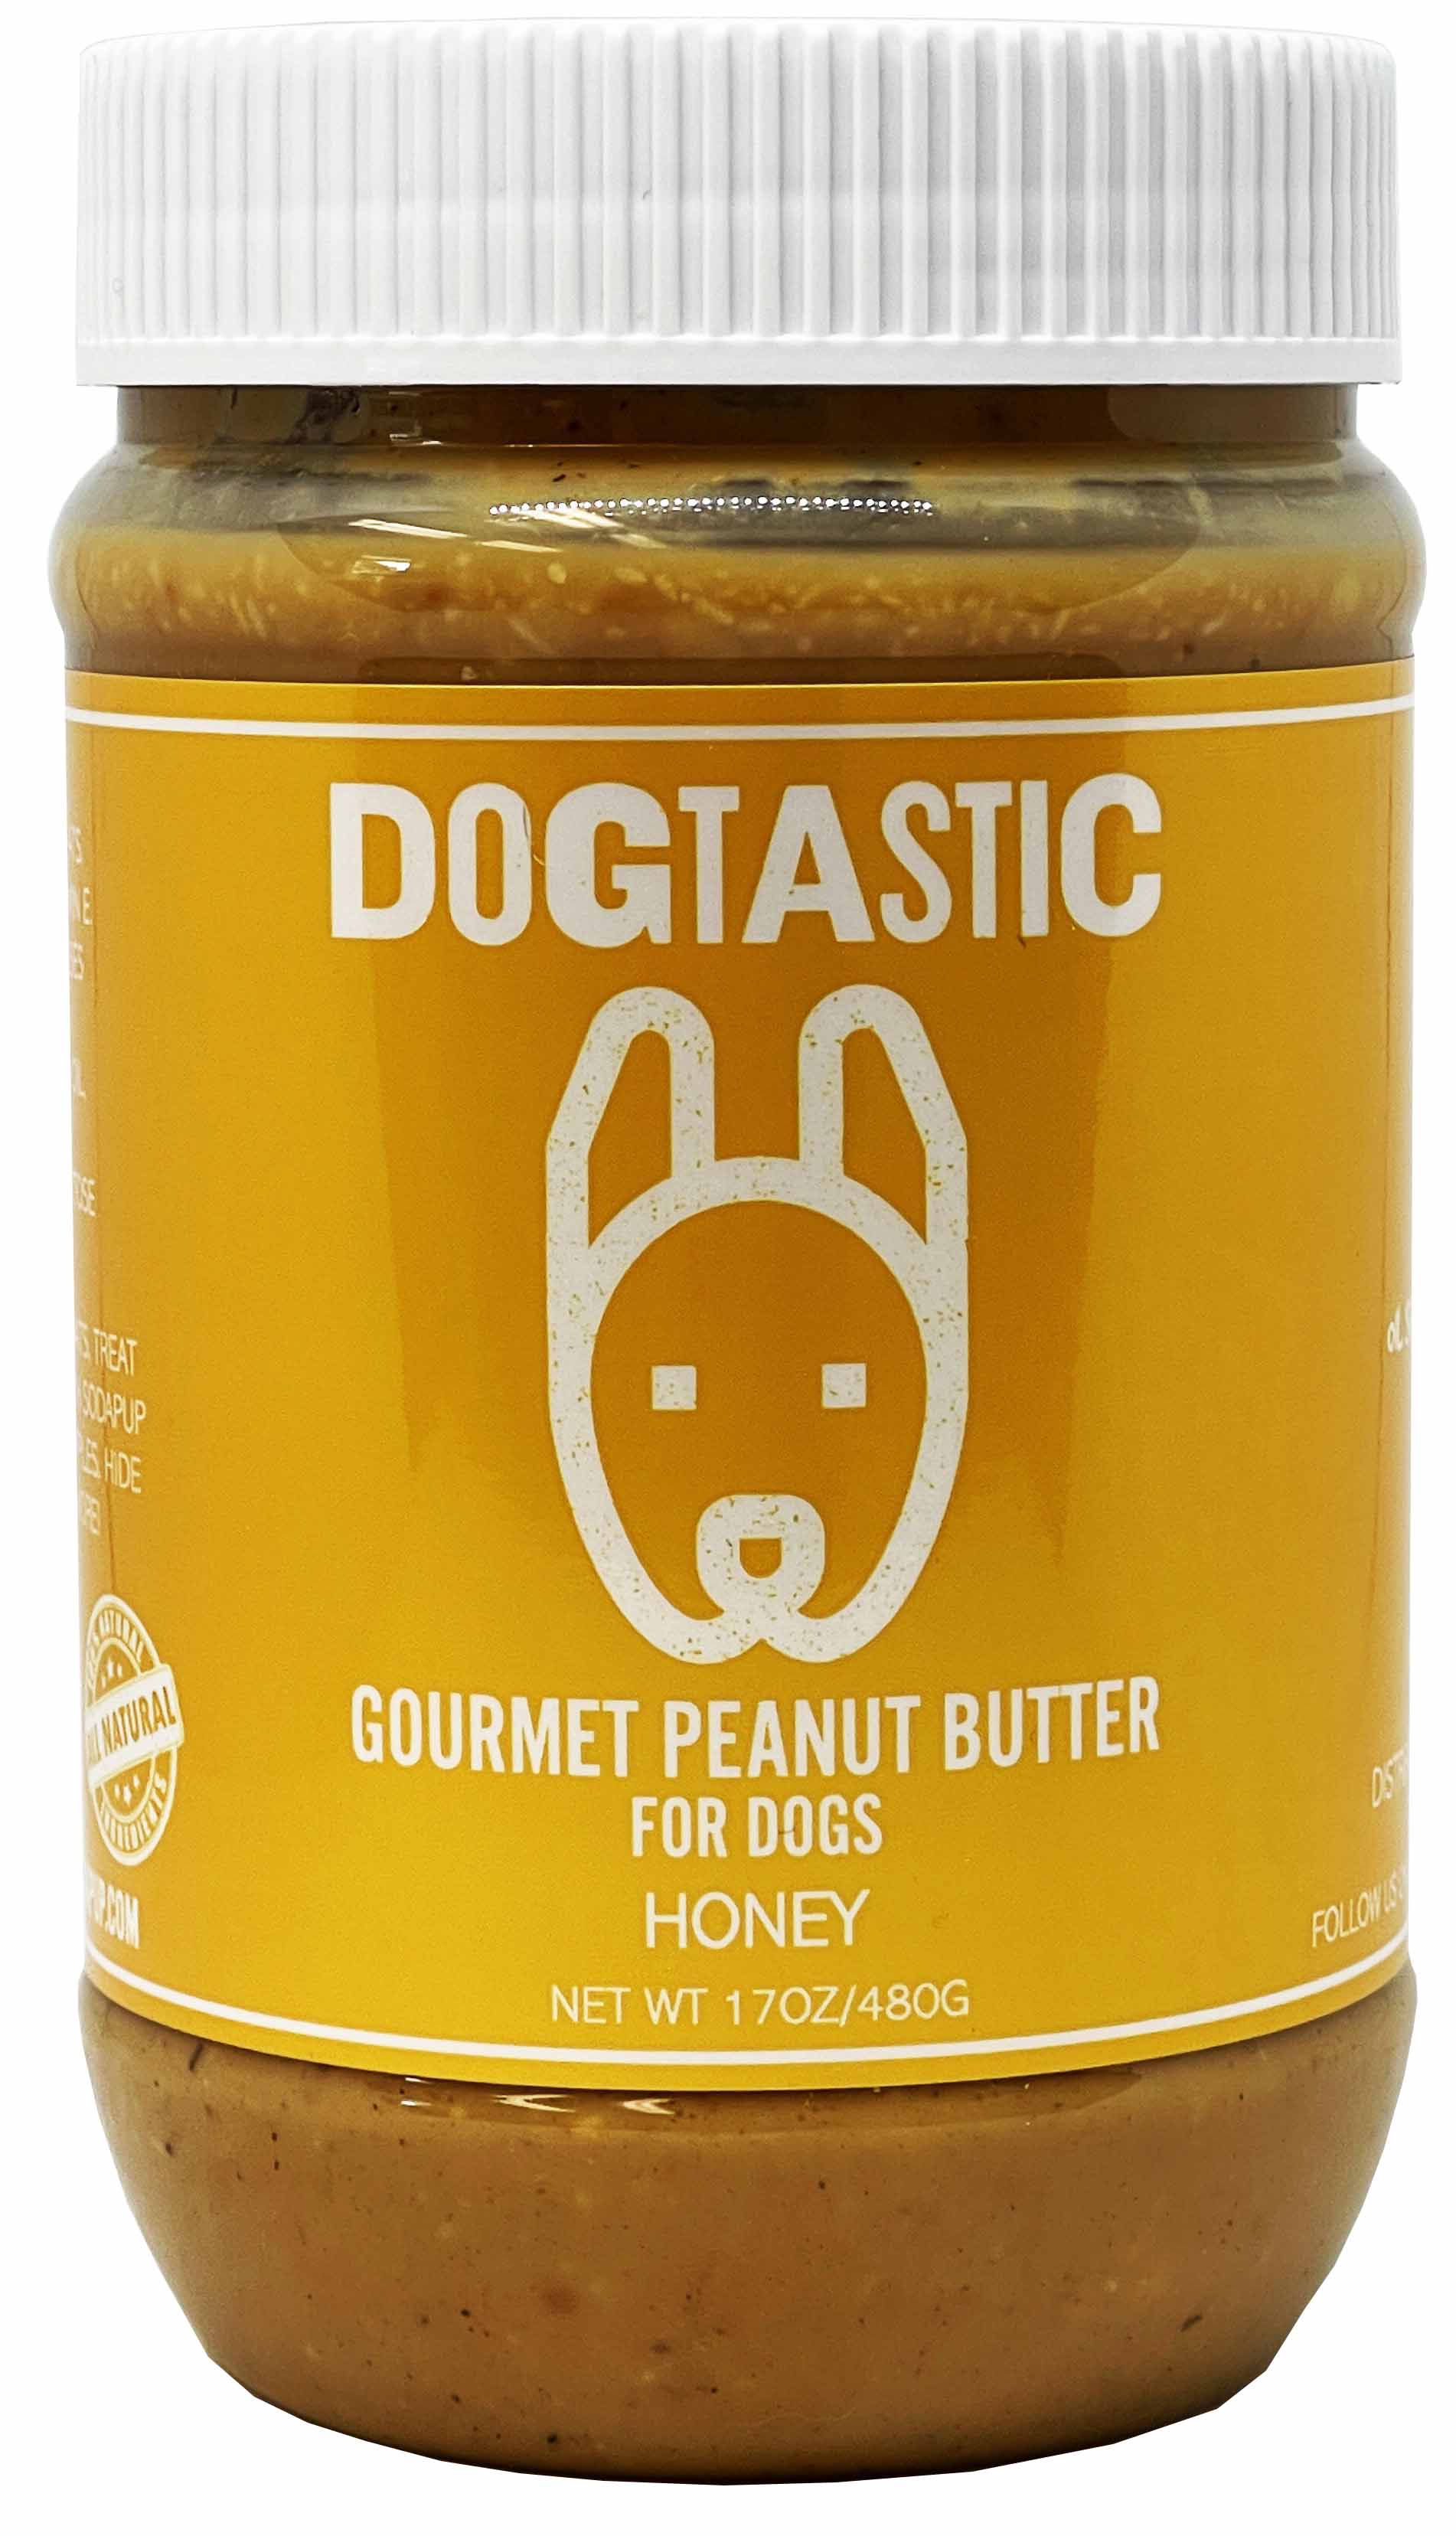 Gourmet Peanut Butter for Dogs - Honey Flavor